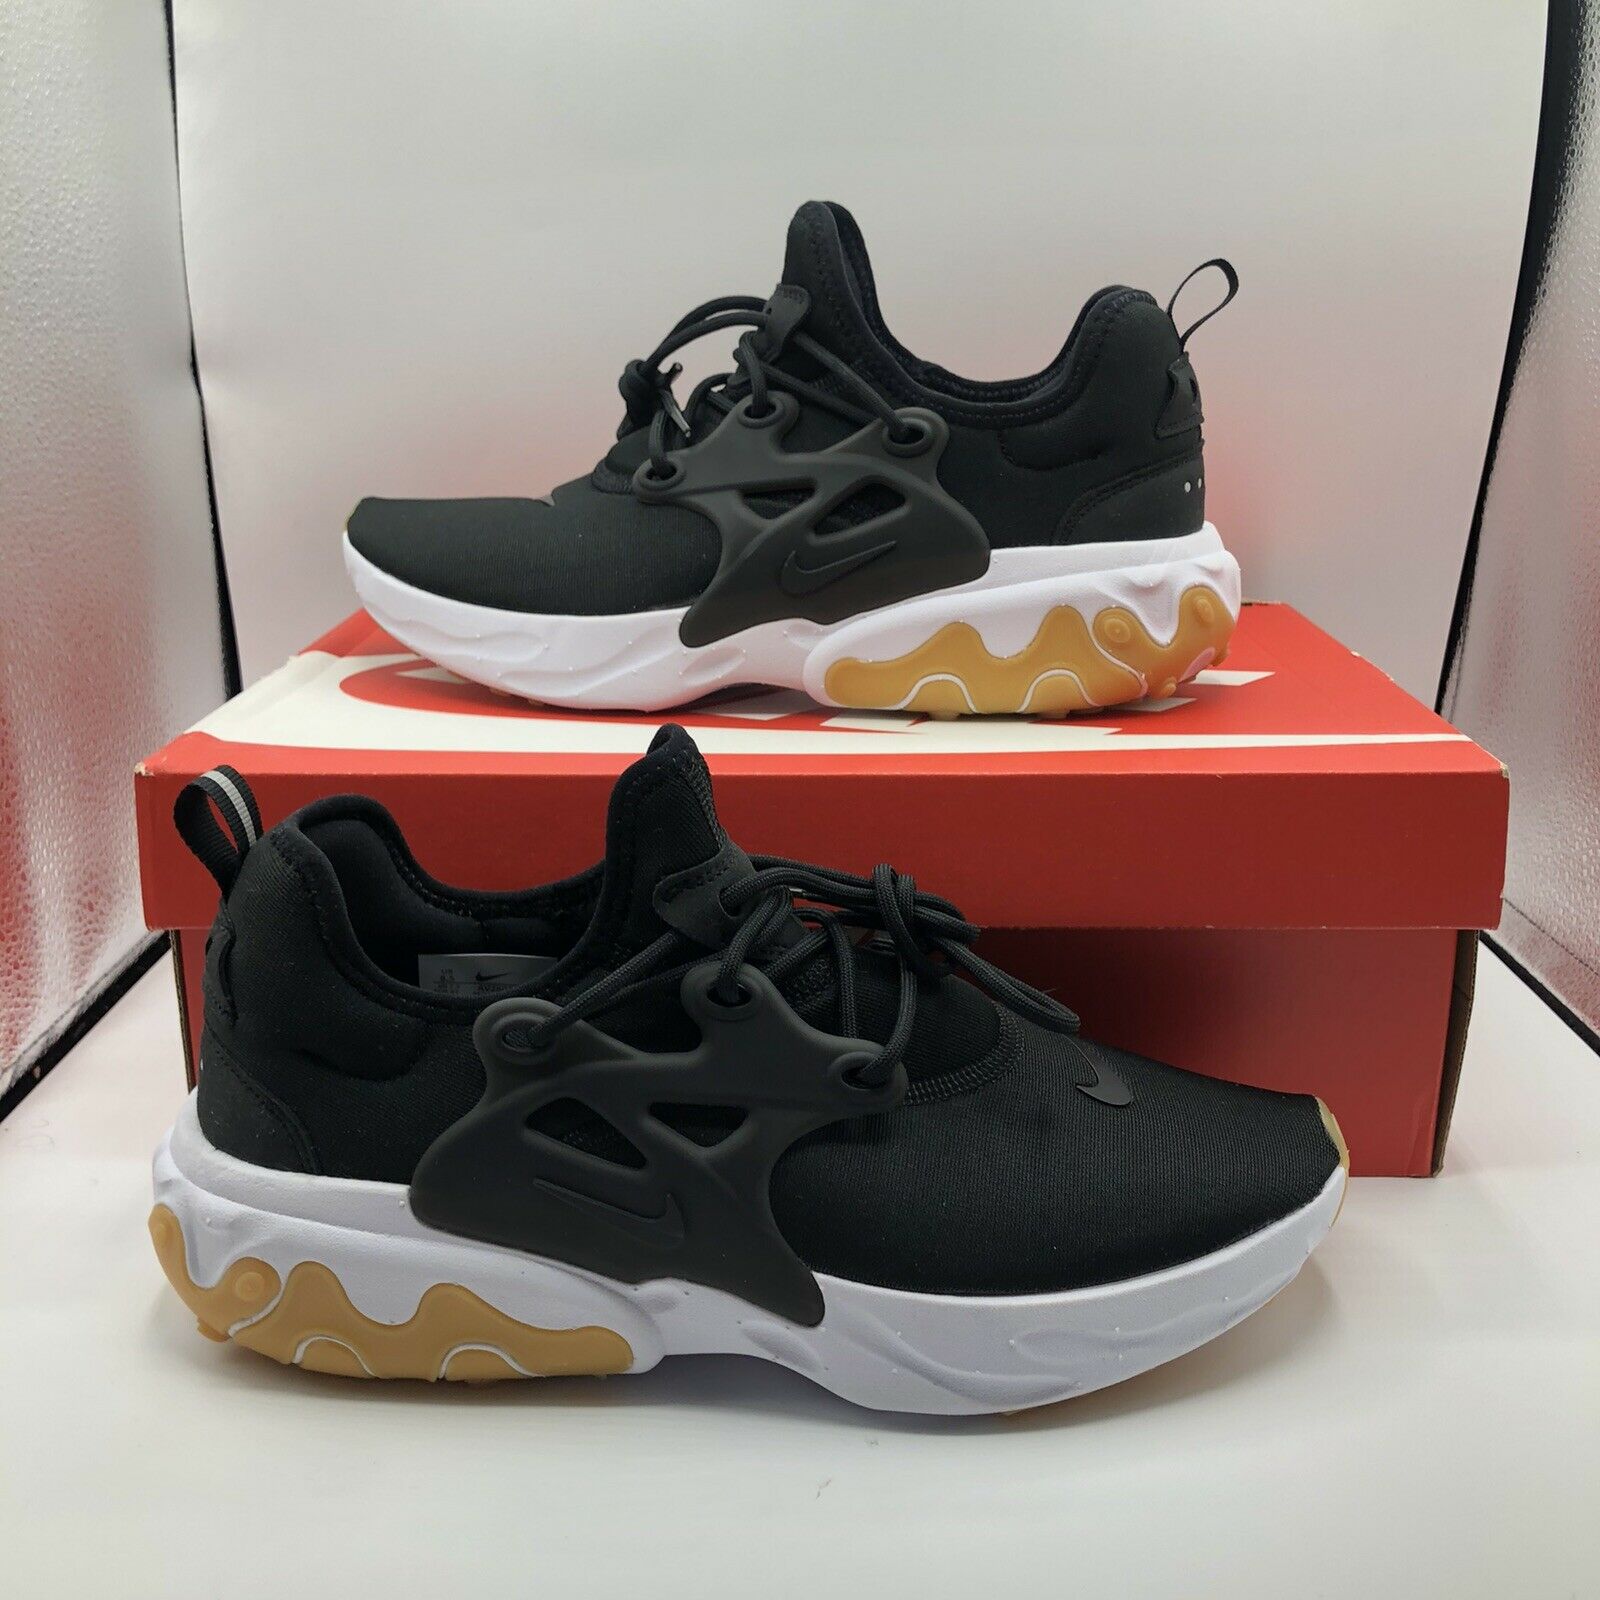 Nike React Presto Black/Gum Size 8.5 Brand New In Box AV2605-007 Men’s Shoes